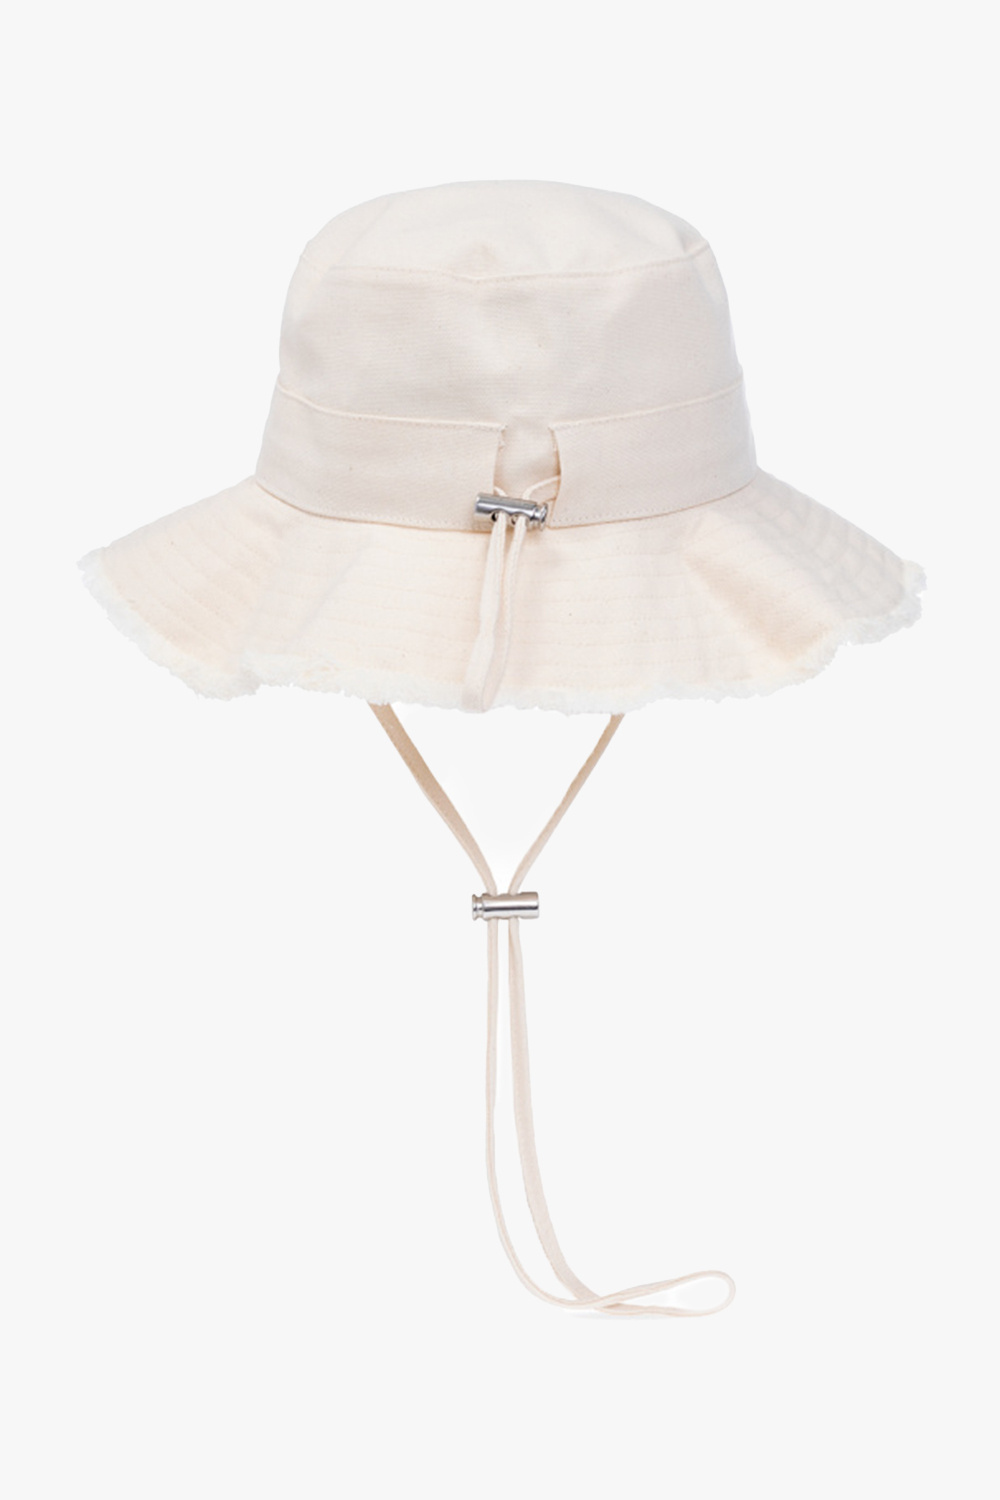 jimmy choo clara crystal embellished beanie hat item ...